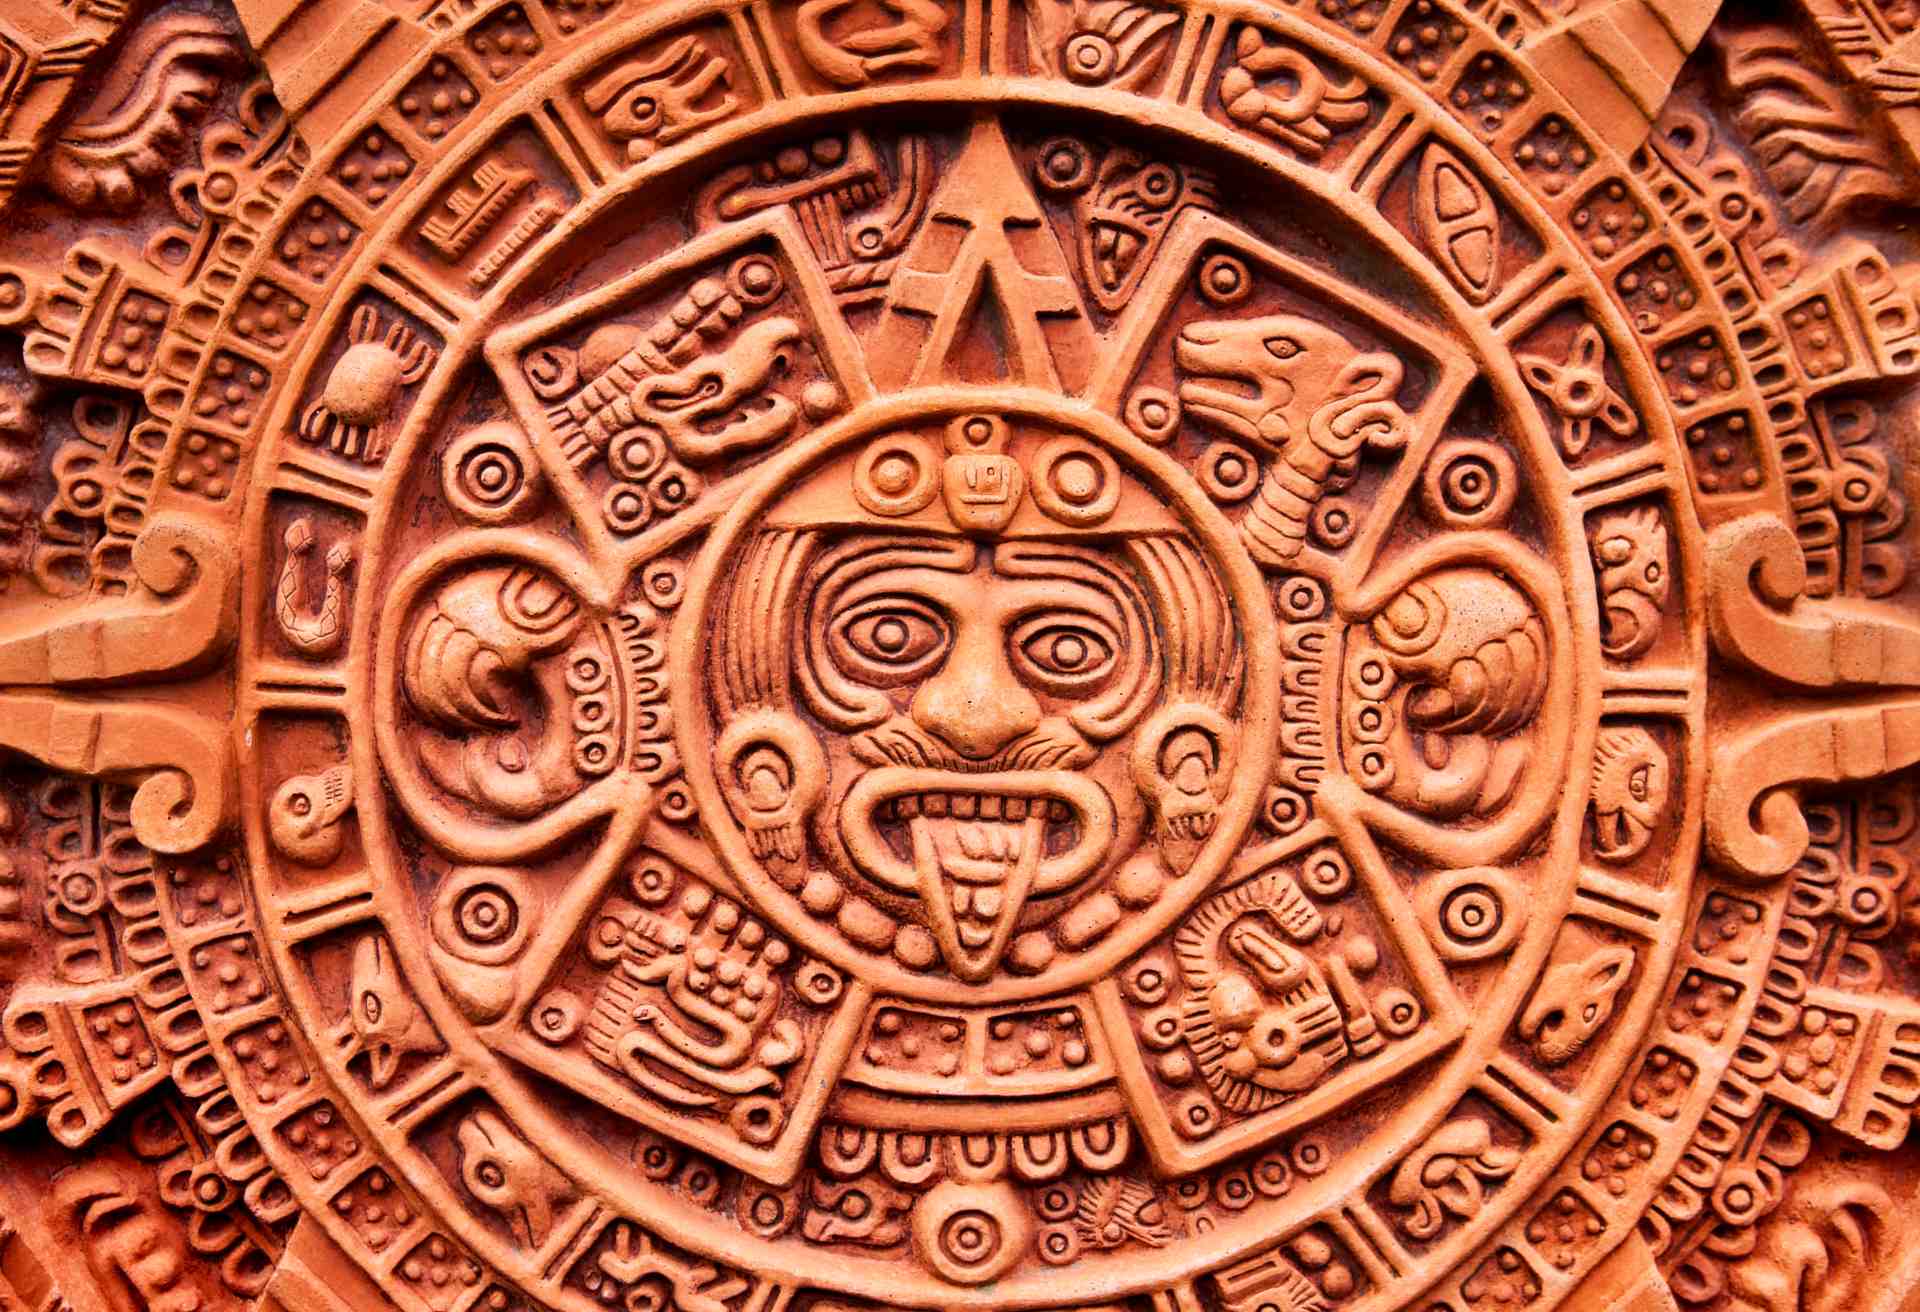 Aztec calendar Stone of the Sun